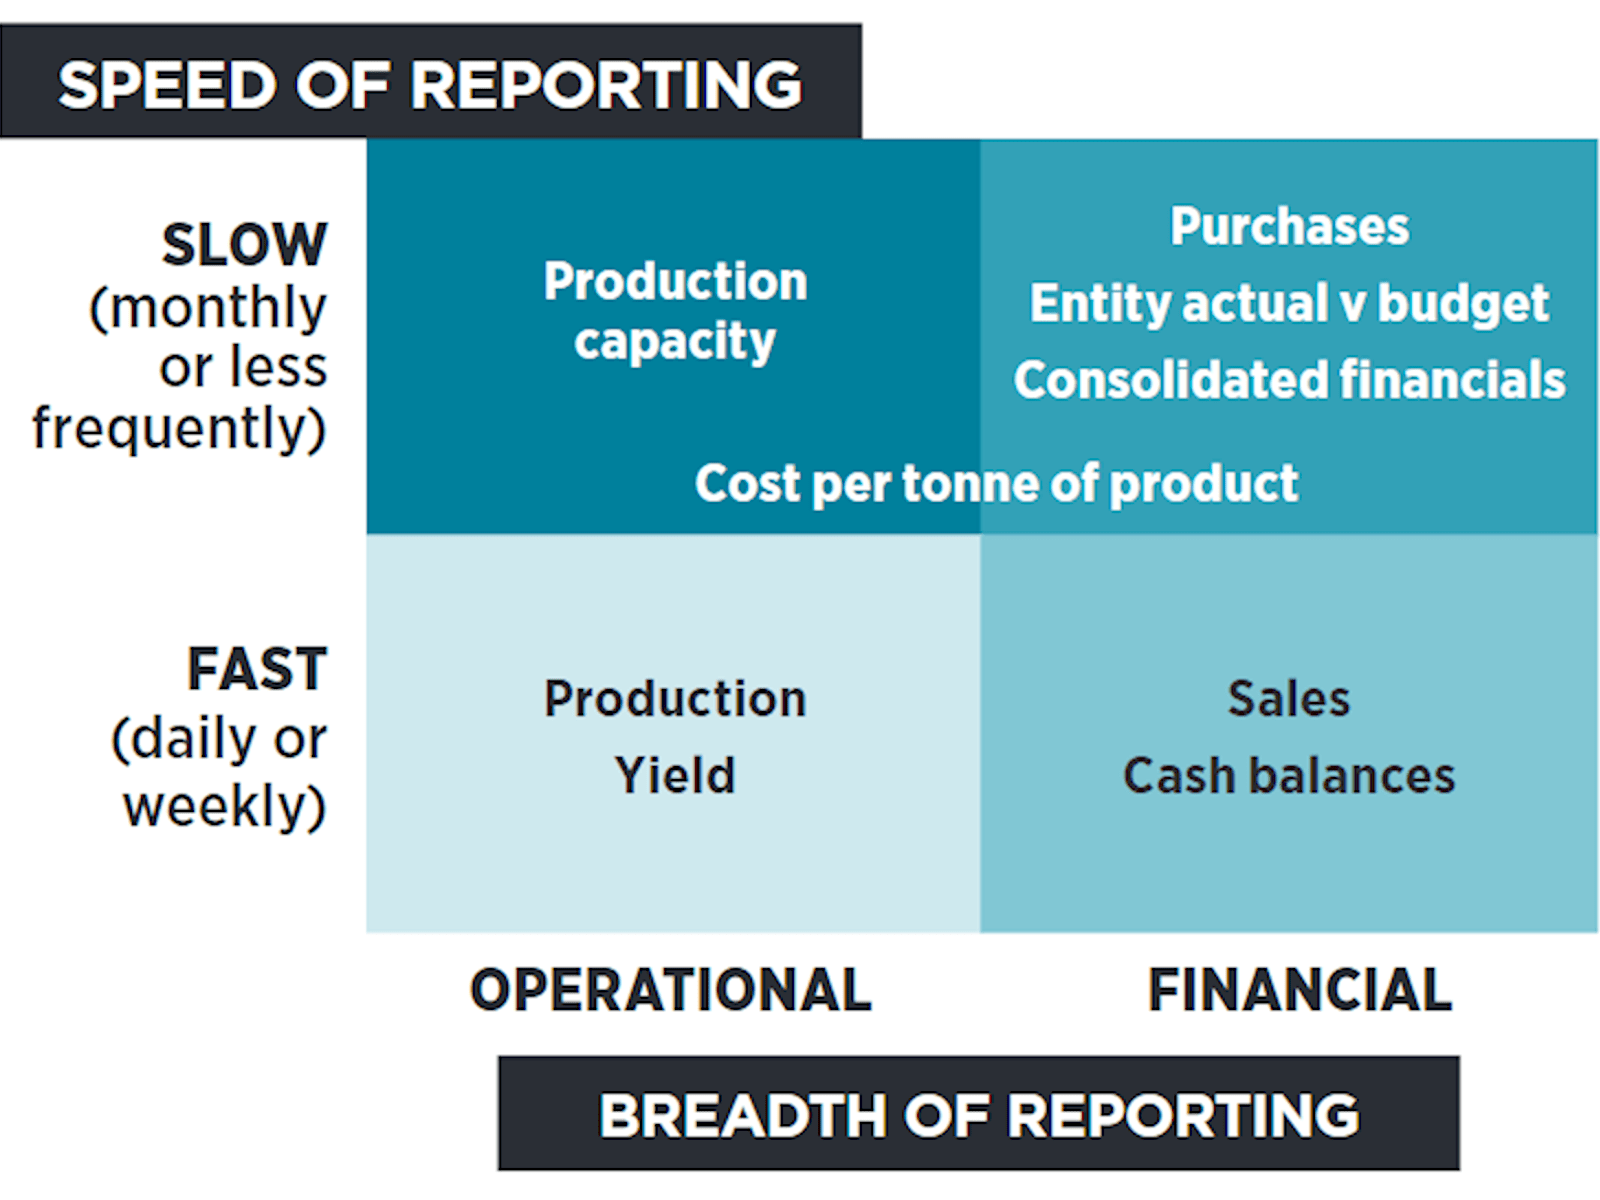 Figure illustrating speed of reporting versus breadth of reporting.